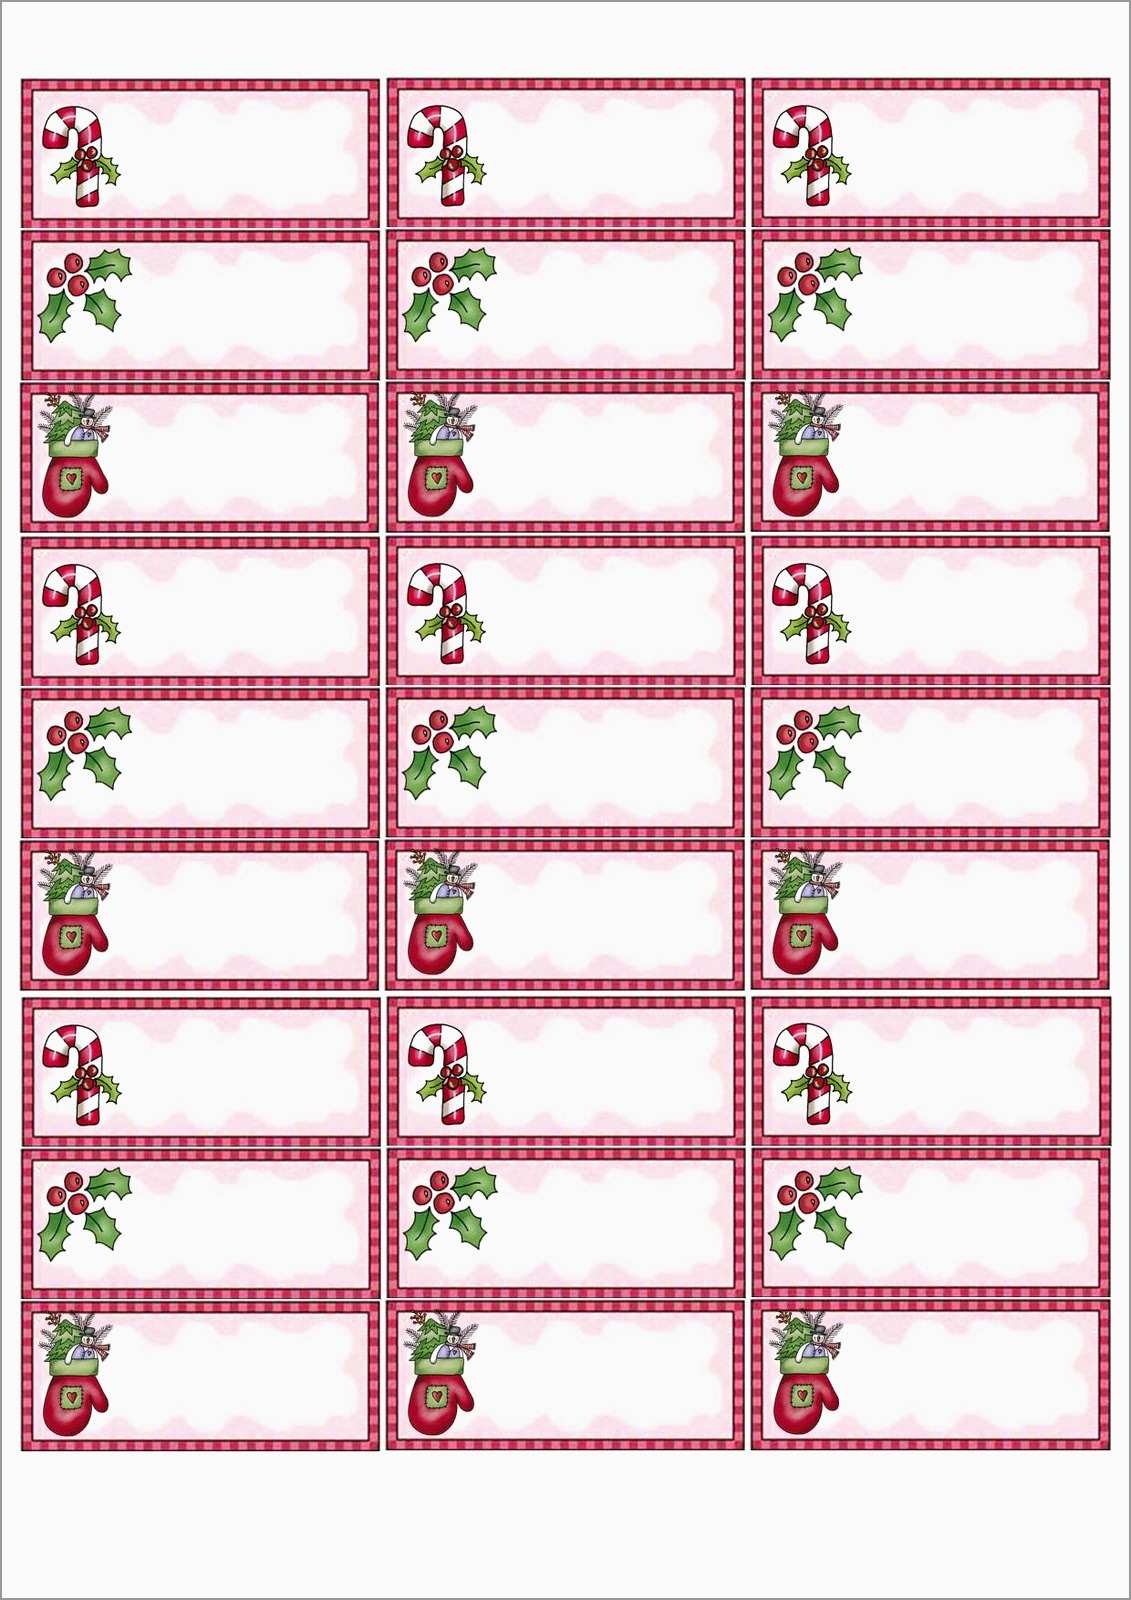 Beautiful Christmas Address Labels Free Templates | Best Of Template - Free Printable Christmas Address Labels Avery 5160